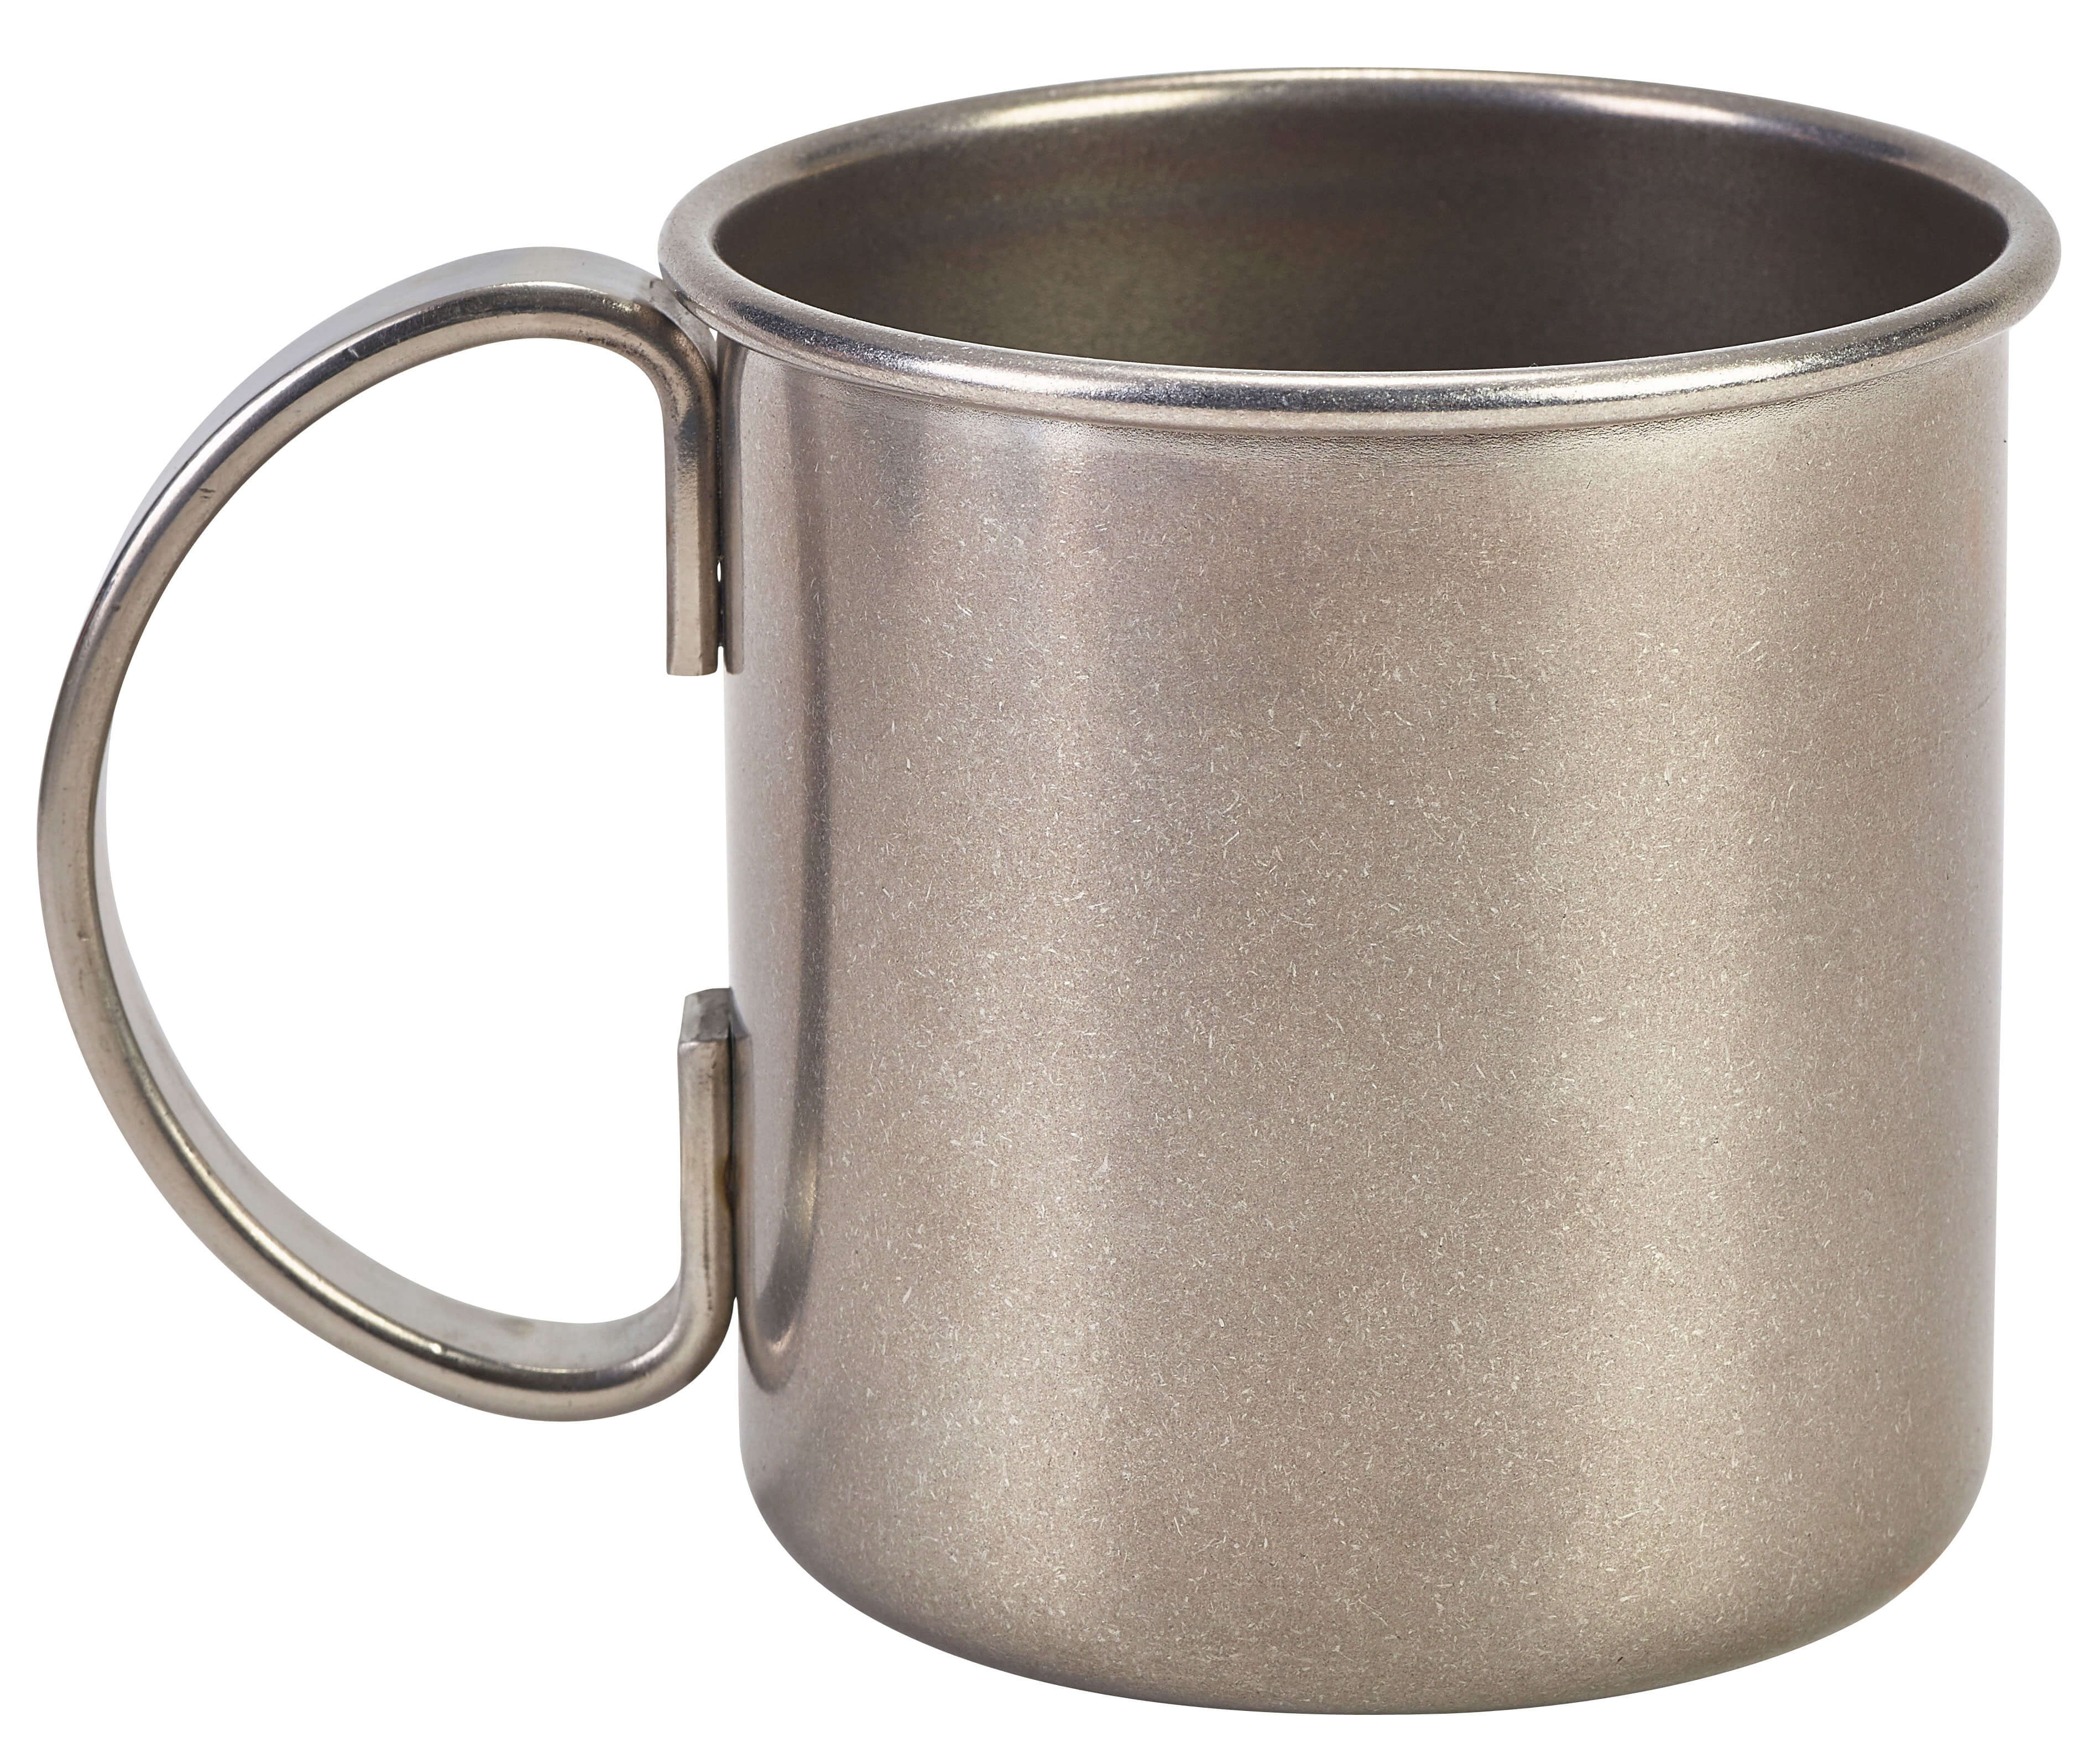 Moscow Mule mug straight, vintage stainless steel - 500ml